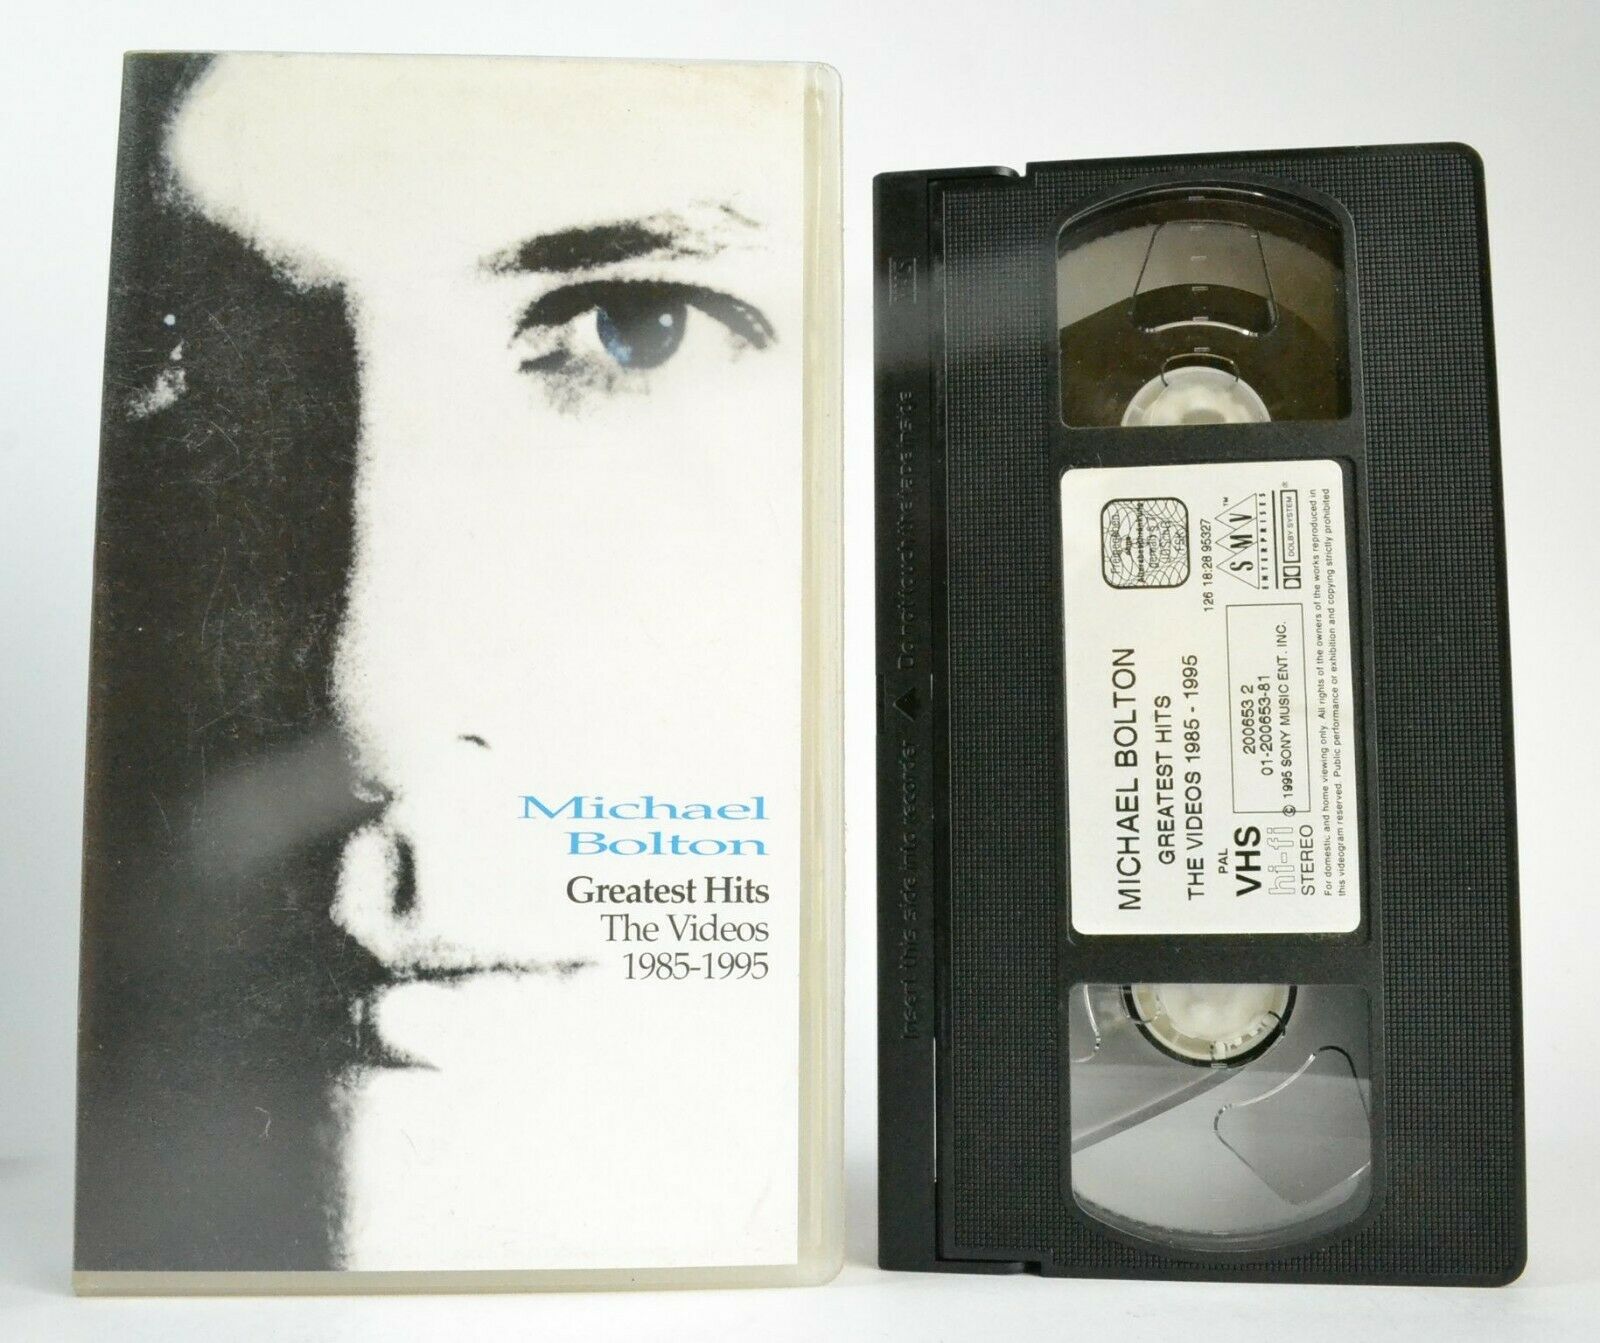 Michael Bolton: Greatest Hits 1985-1995 [Videos] 'Soul Provider' - Music - VHS-